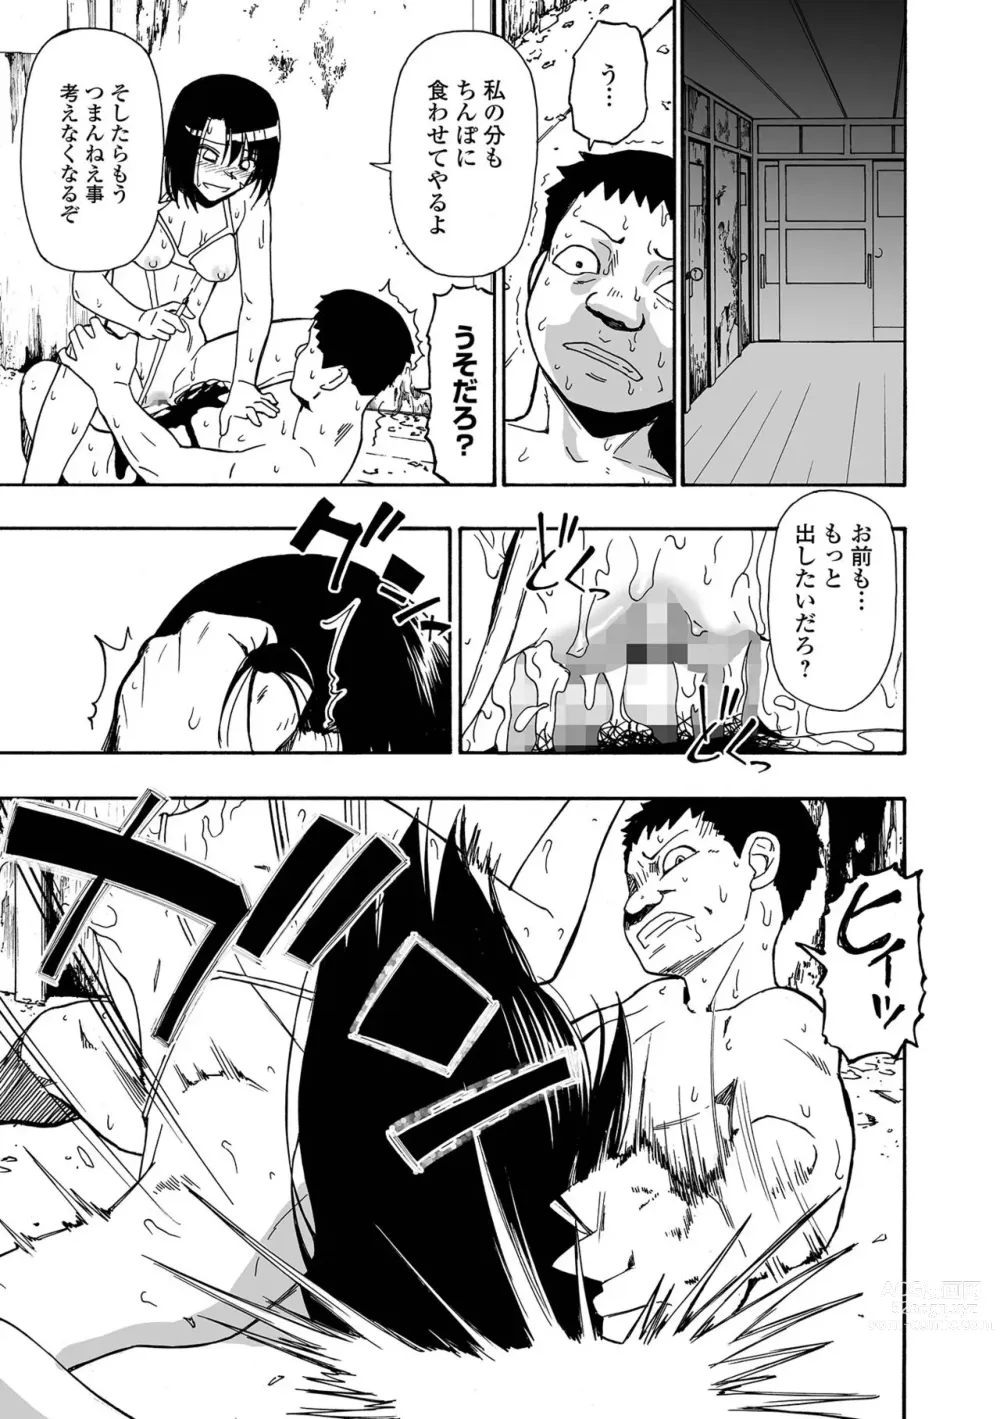 Page 187 of manga Garbage Dump Ch. 1-9